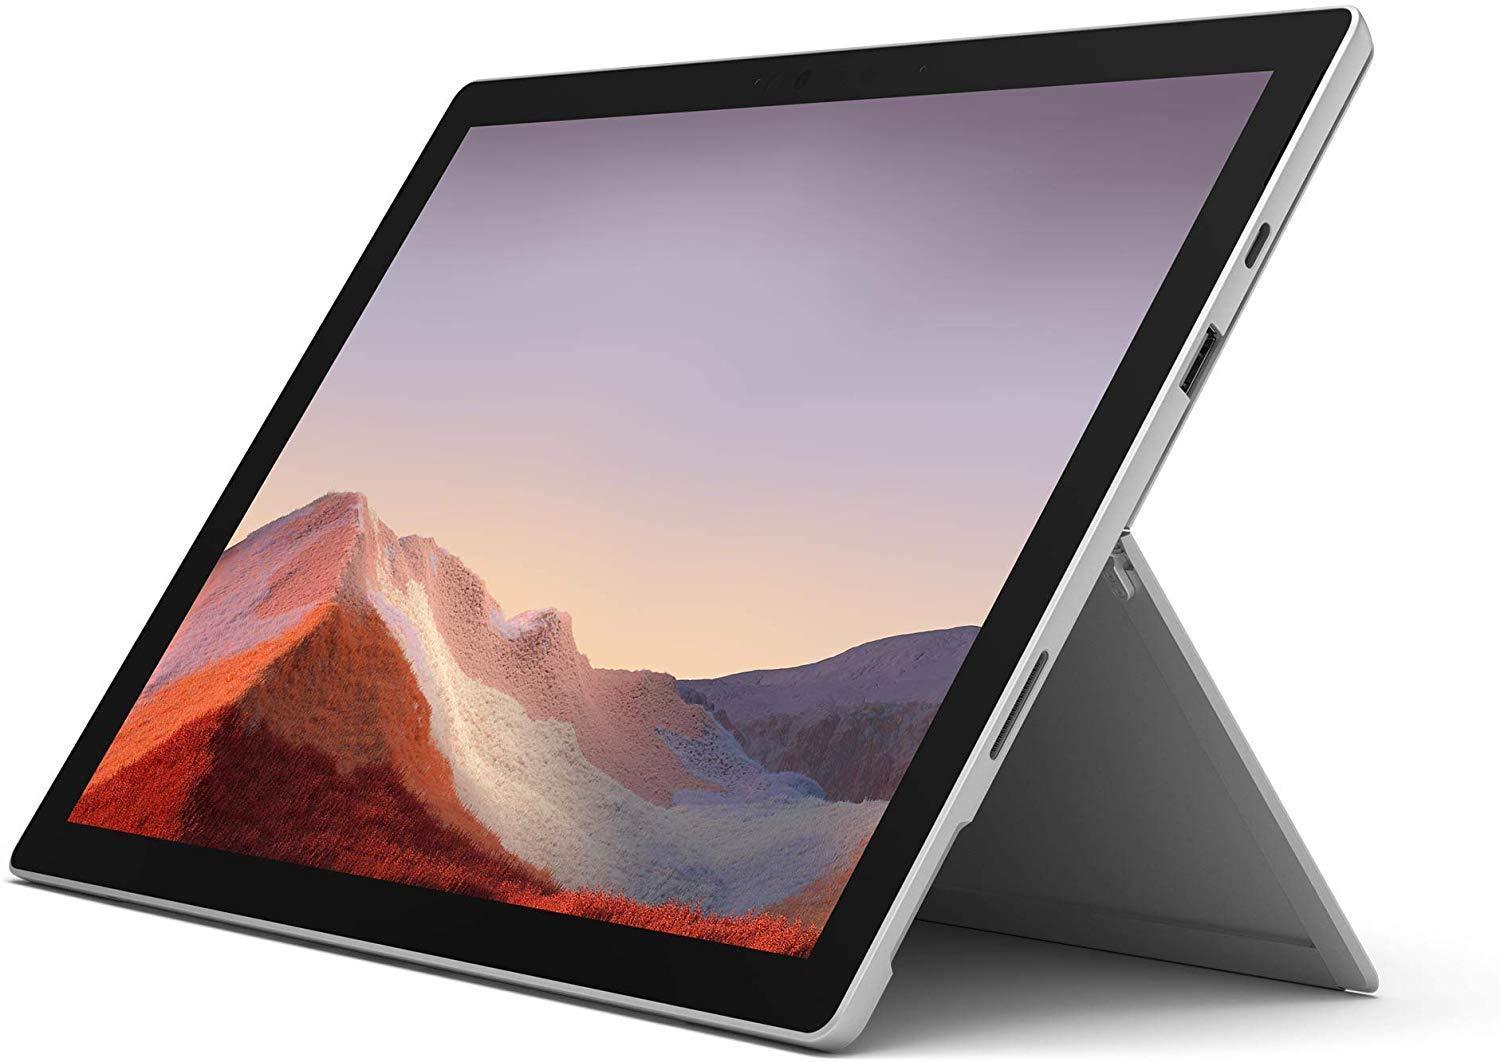 Microsoft Surface Pro 7, 2-in-1 Laptop, Intel Core i5-1035G4, 12.3 Inch, 128GB SSD, 8GB RAM, Intel® Iris™ Plus Graphics, Win10, No Keyboard, Platinum - Store 974 | ستور ٩٧٤